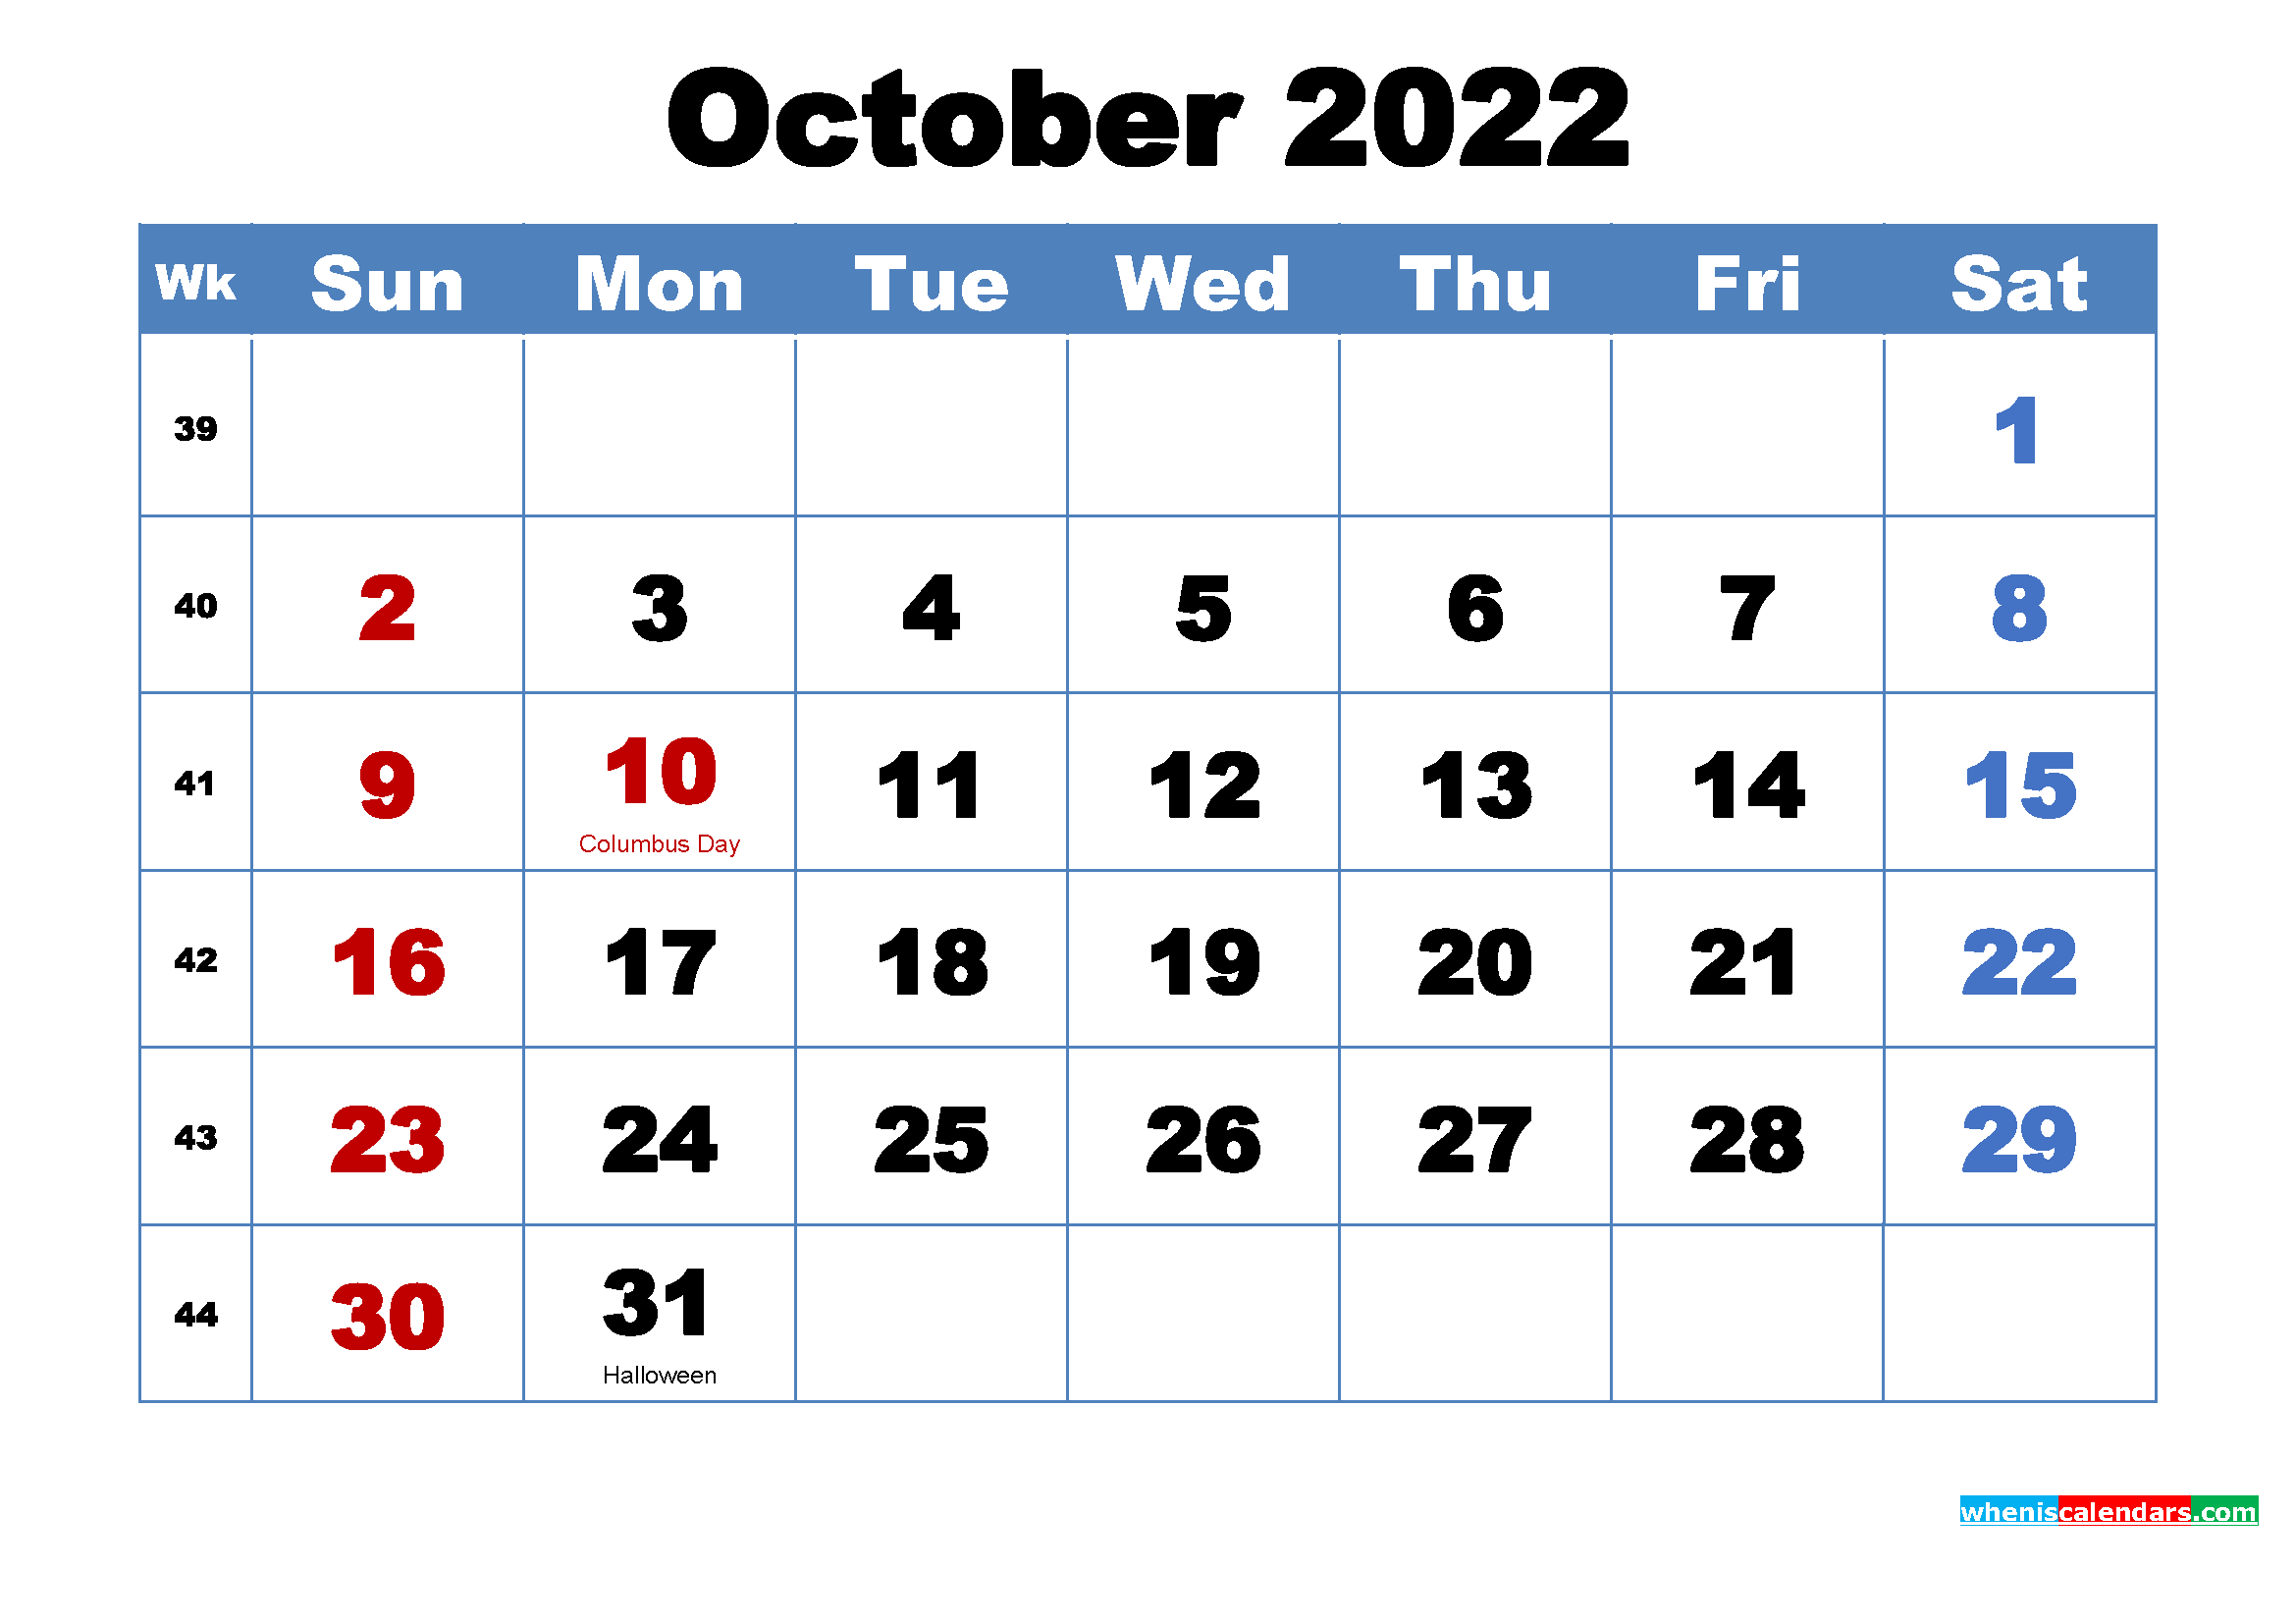 October 2022 Calendar Wallpaper Free Download